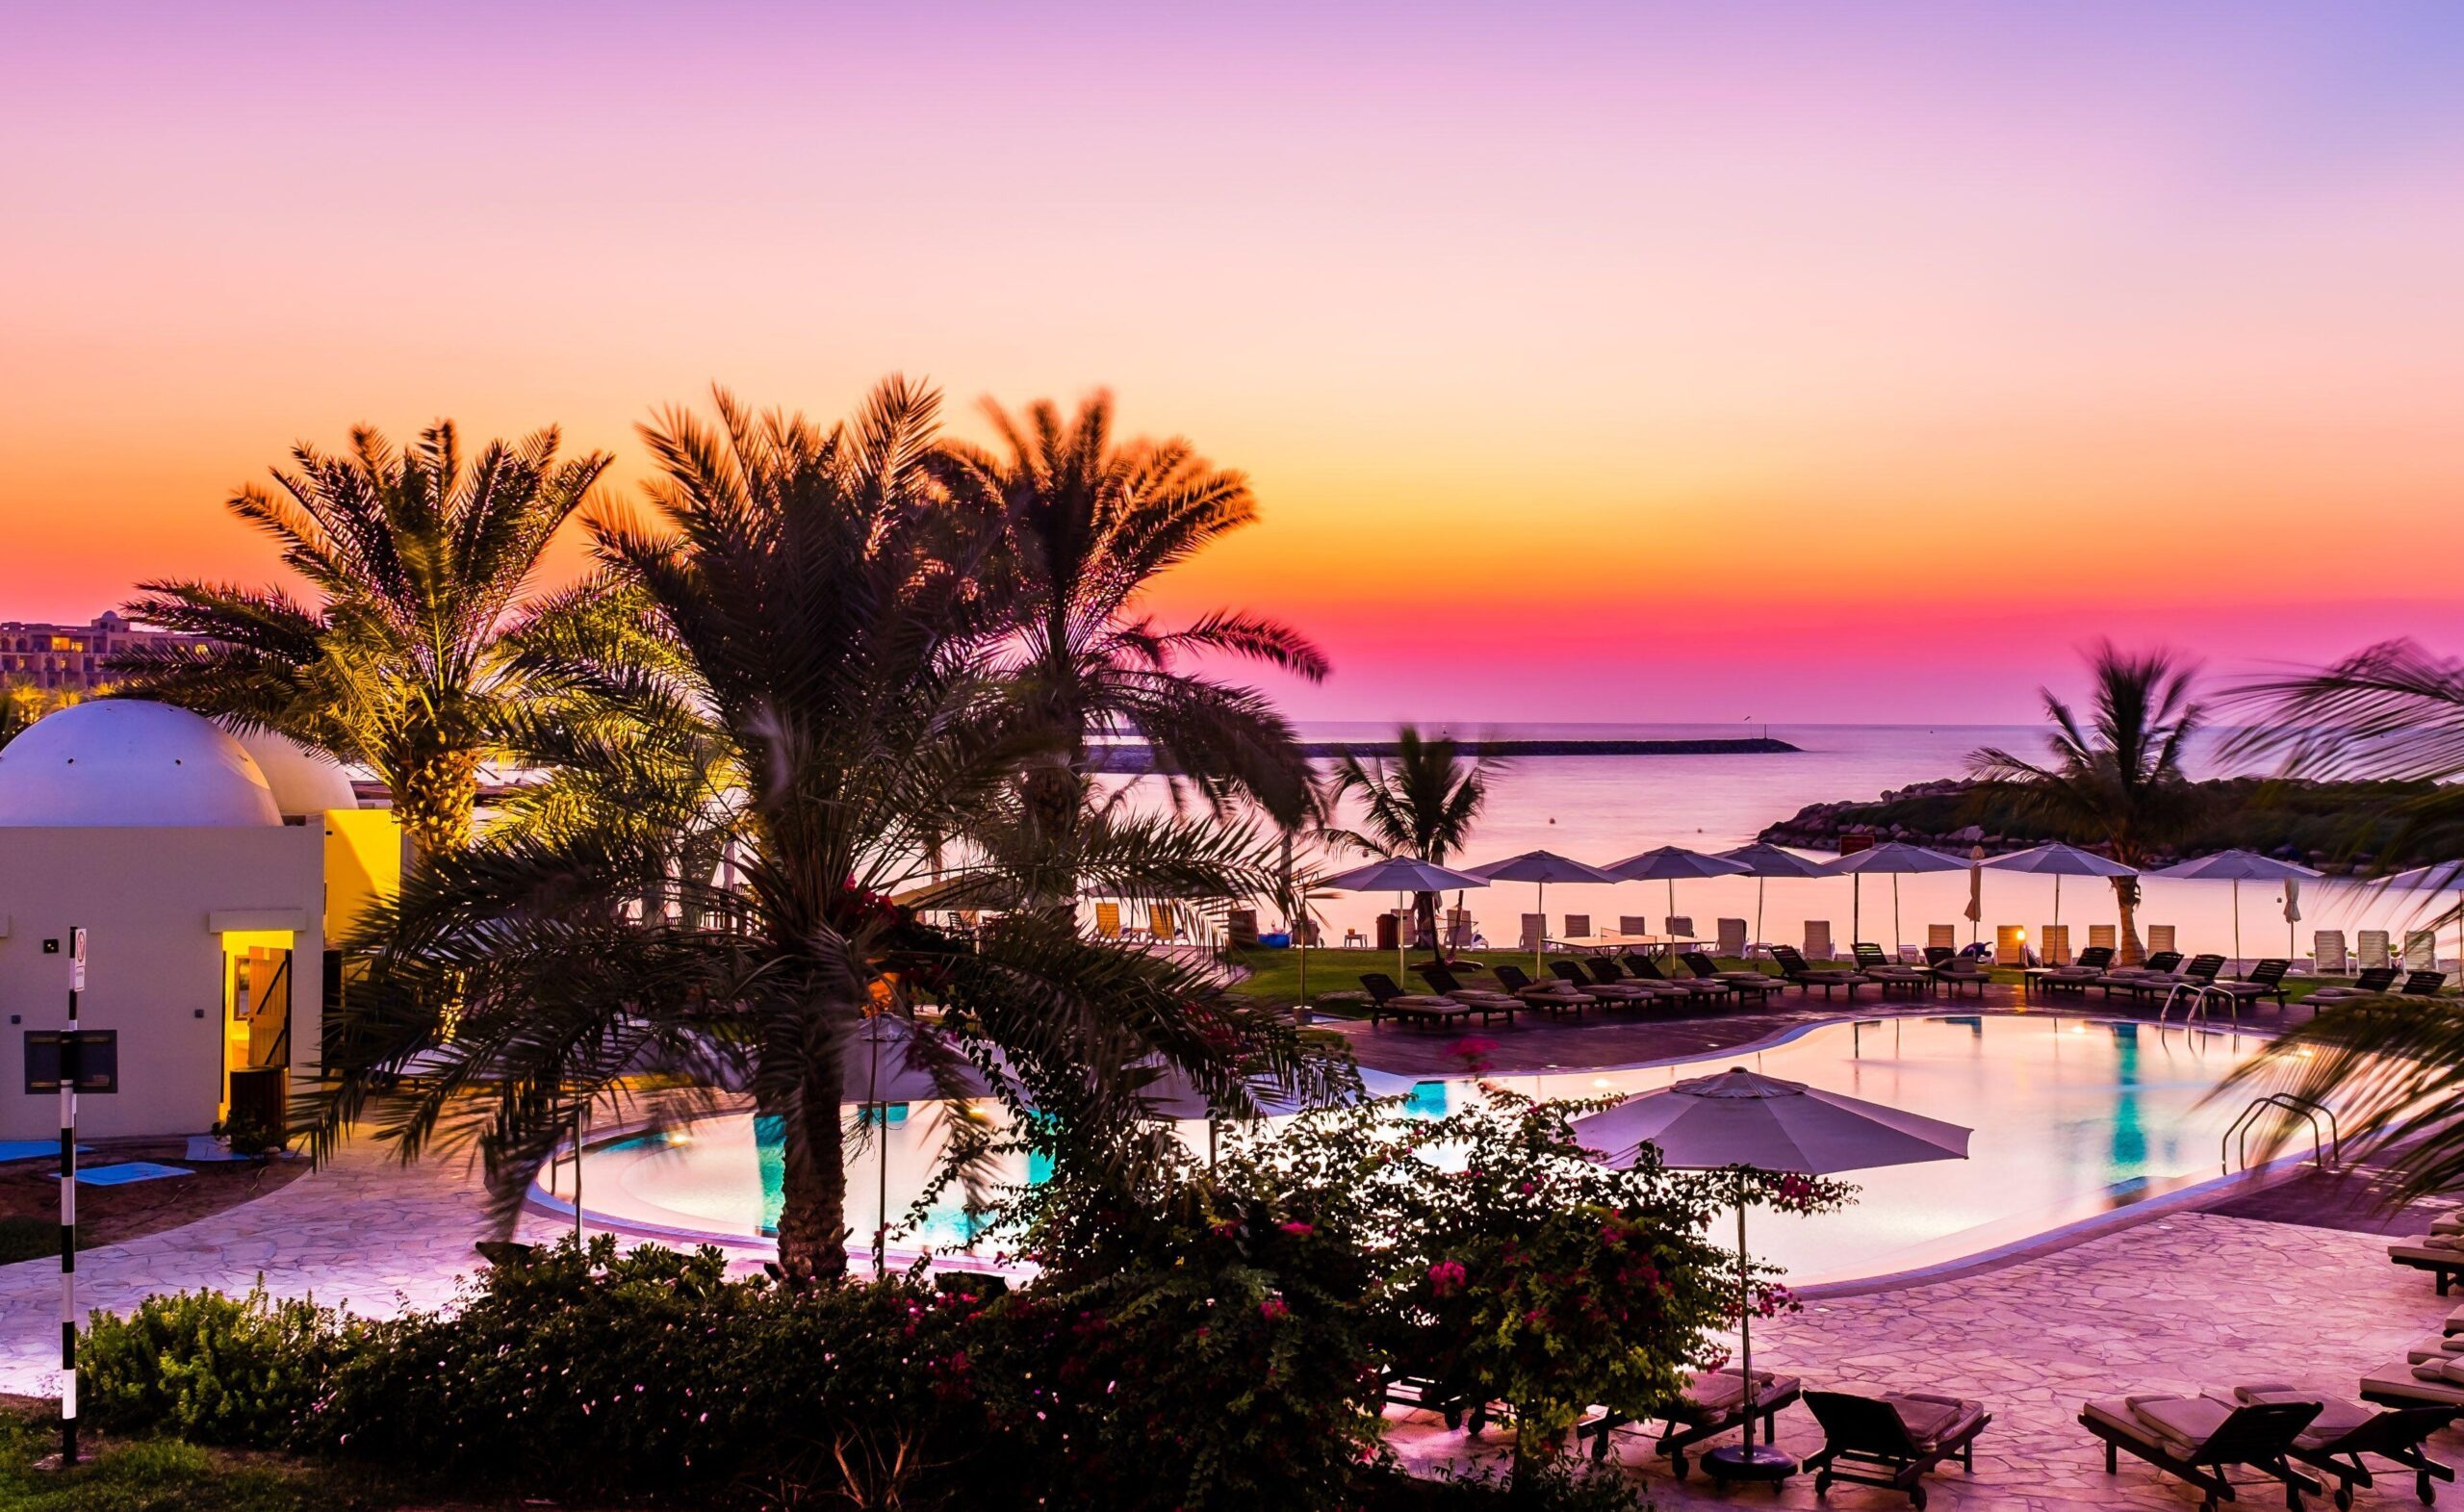 The Hilton Beach Resort in Ras Al Khaimah is being taken over by Rixos Hotels